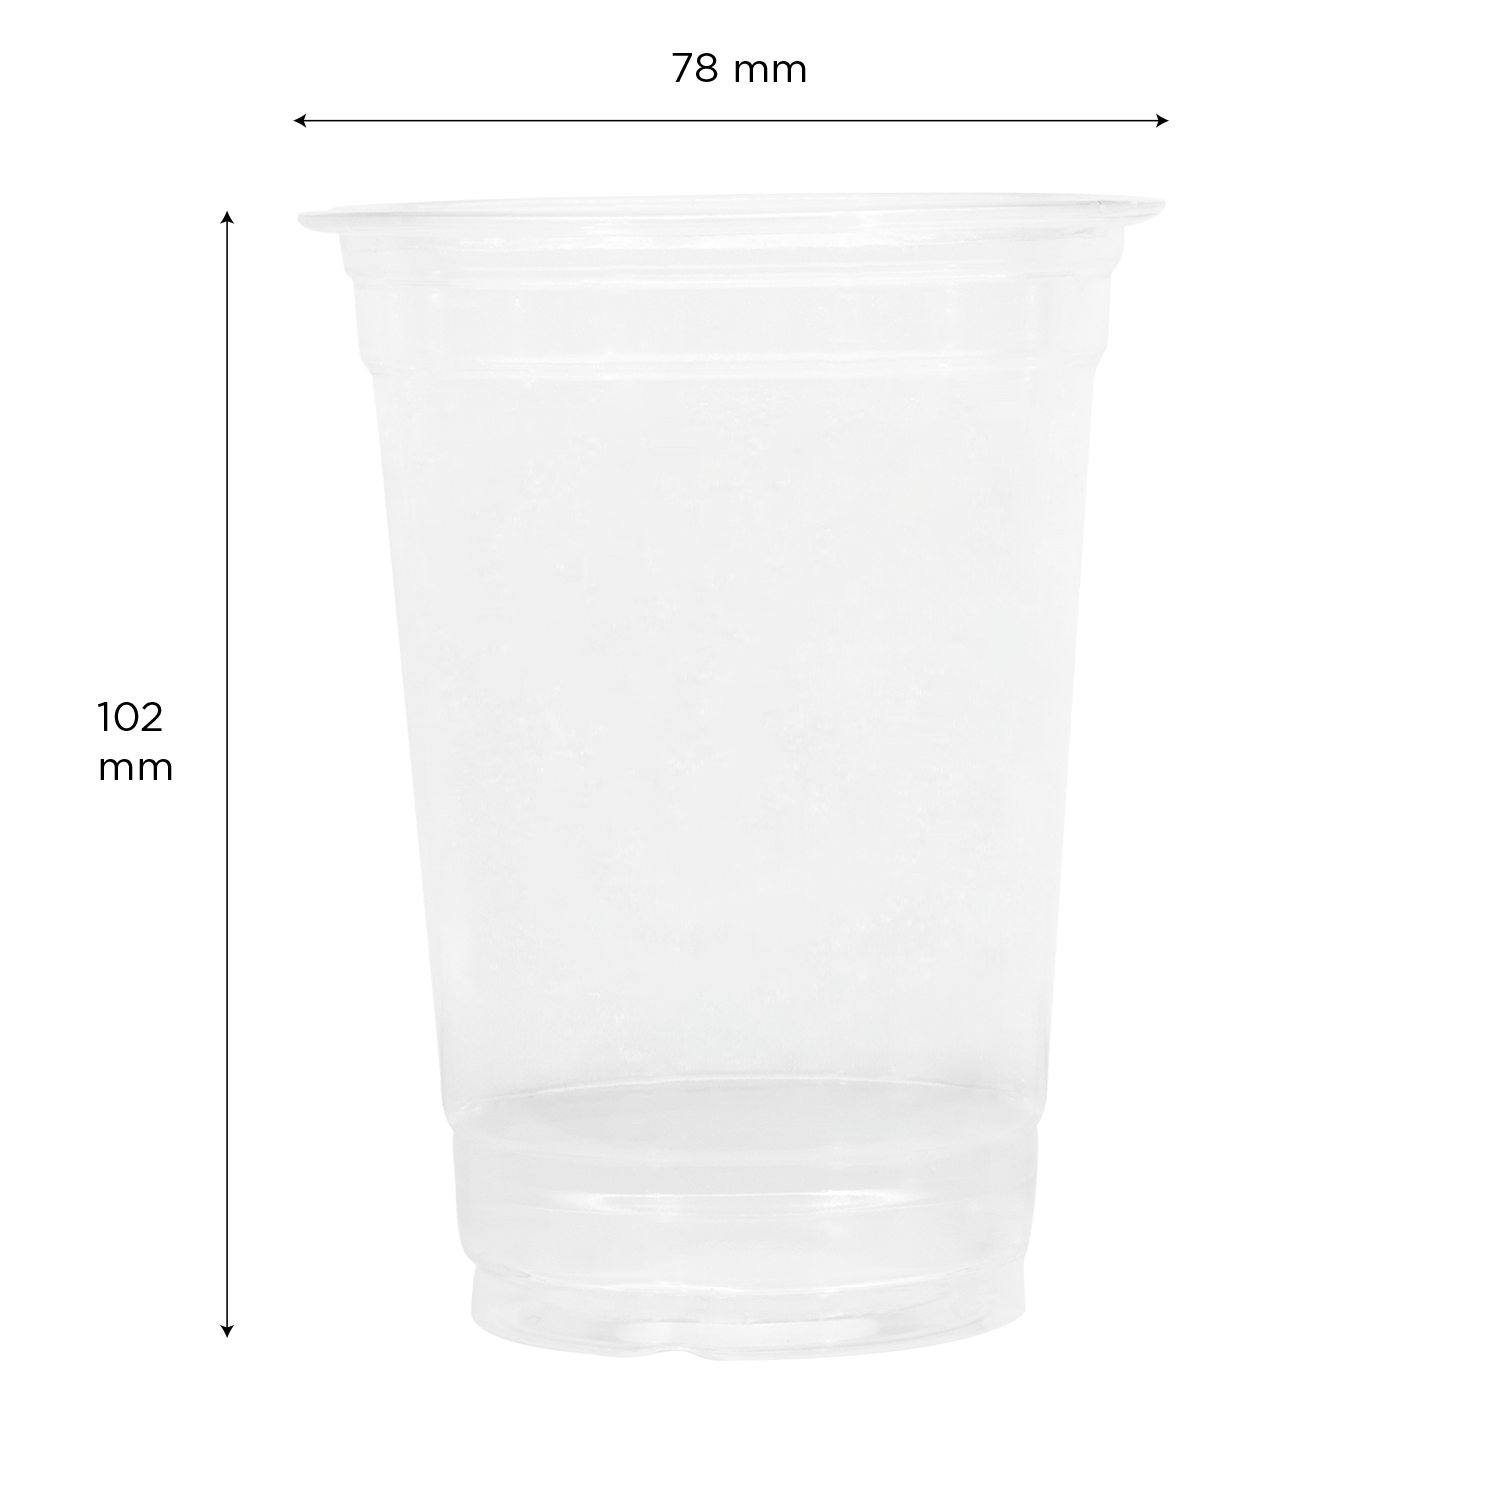 Karat Earth 10oz PLA Cup, Clear (78mm) - 1,000 pcs